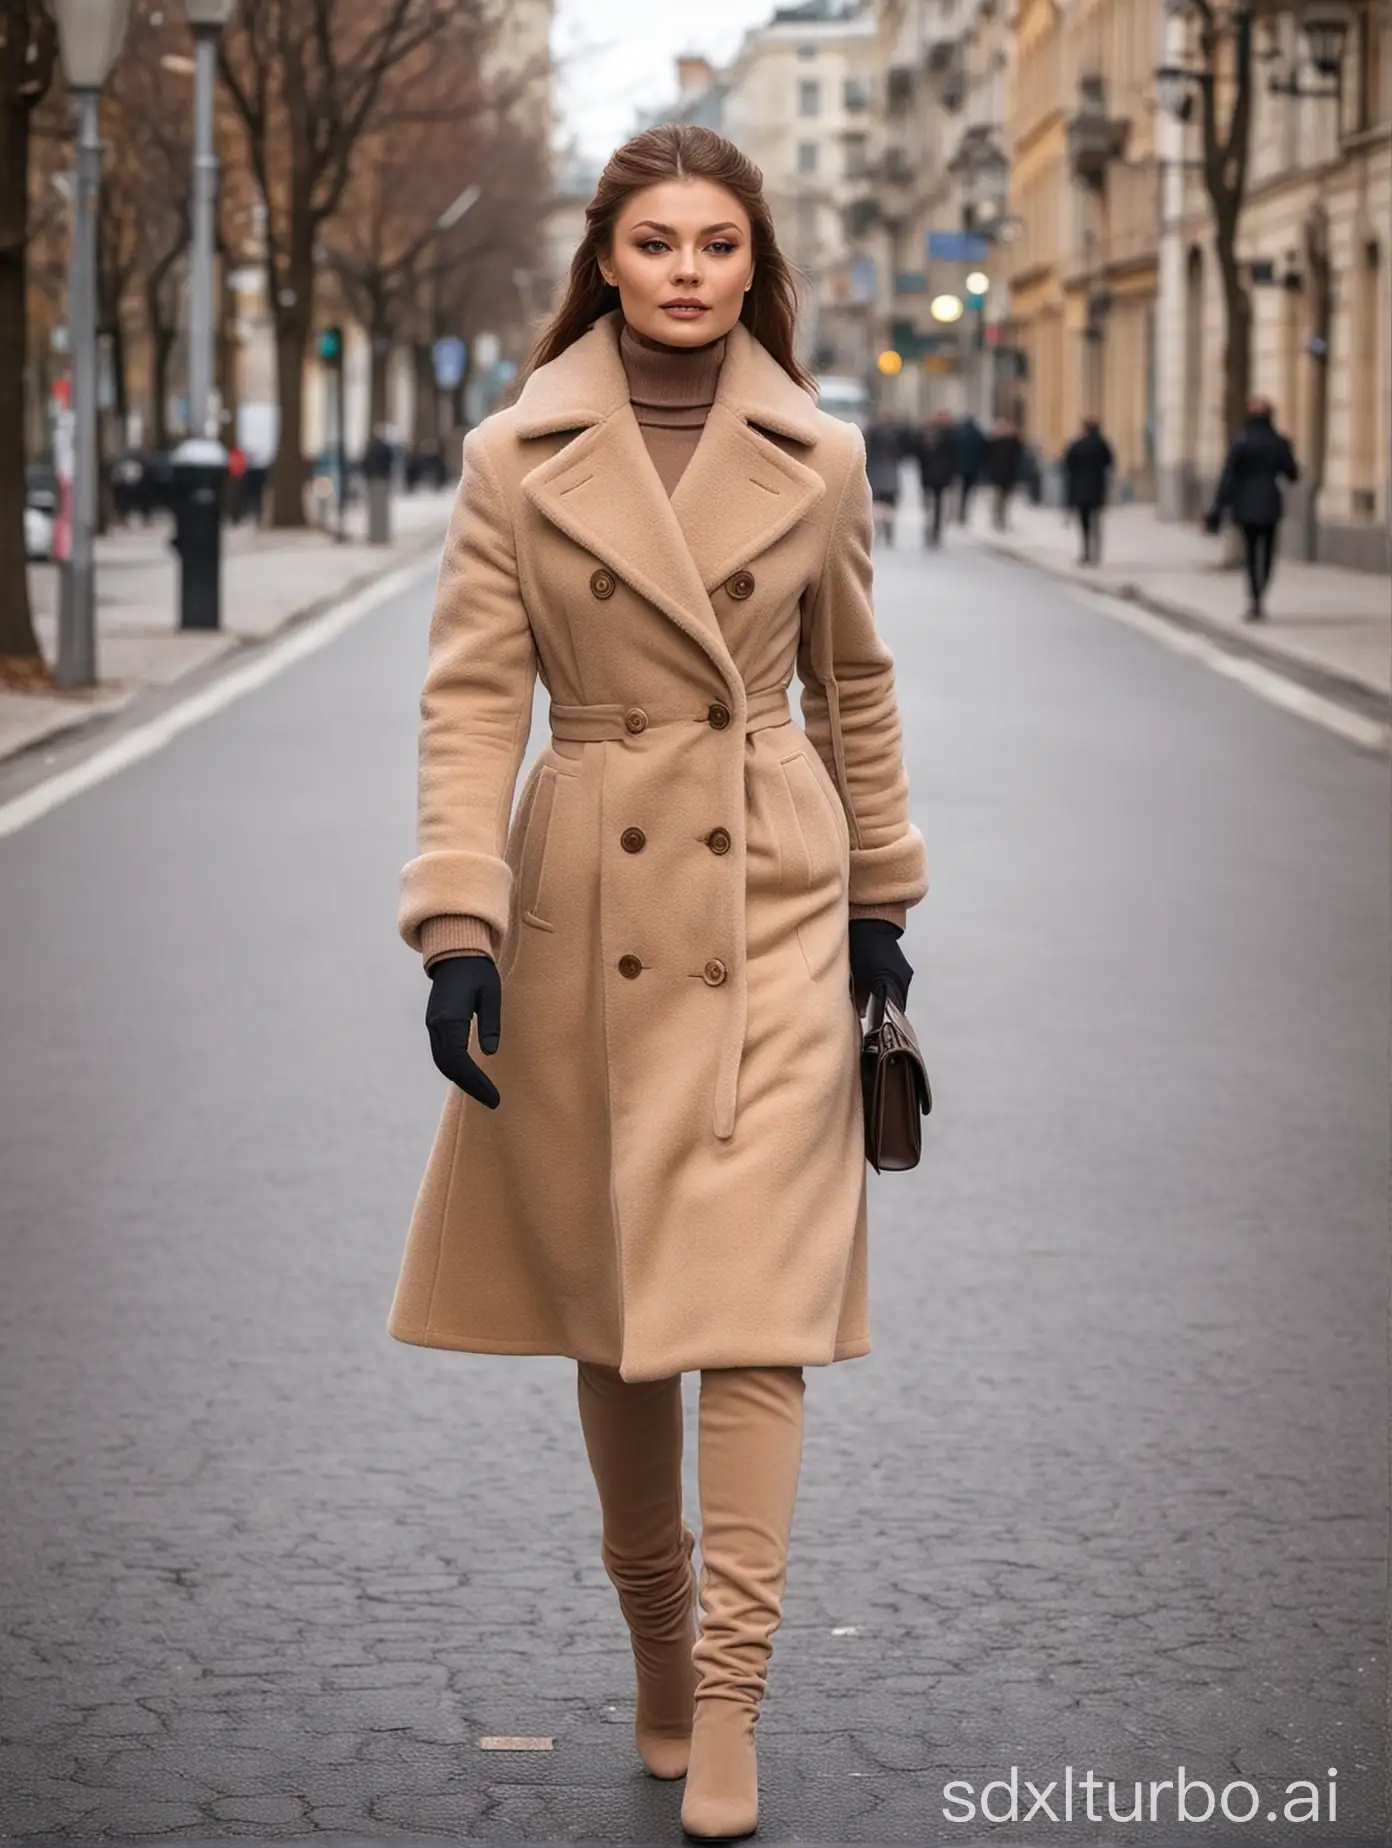 Detailed Alina Kabaeva  walk on the street wearing elegant winter outfit